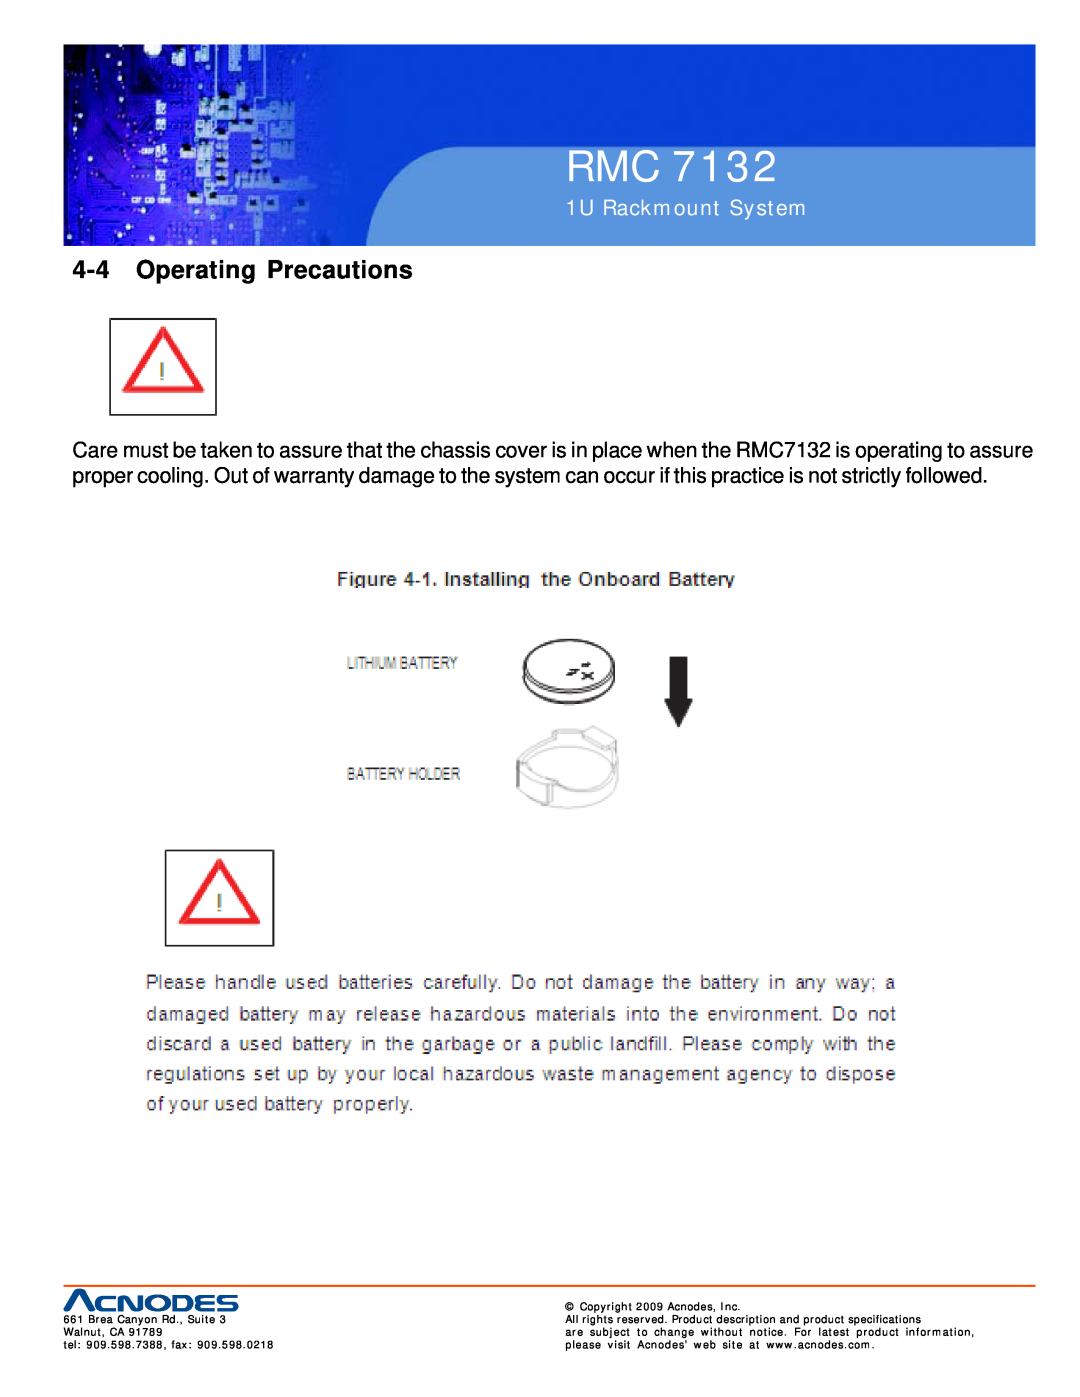 Acnodes RMC 7132 user manual Operating Precautions, 1U Rackmount System 